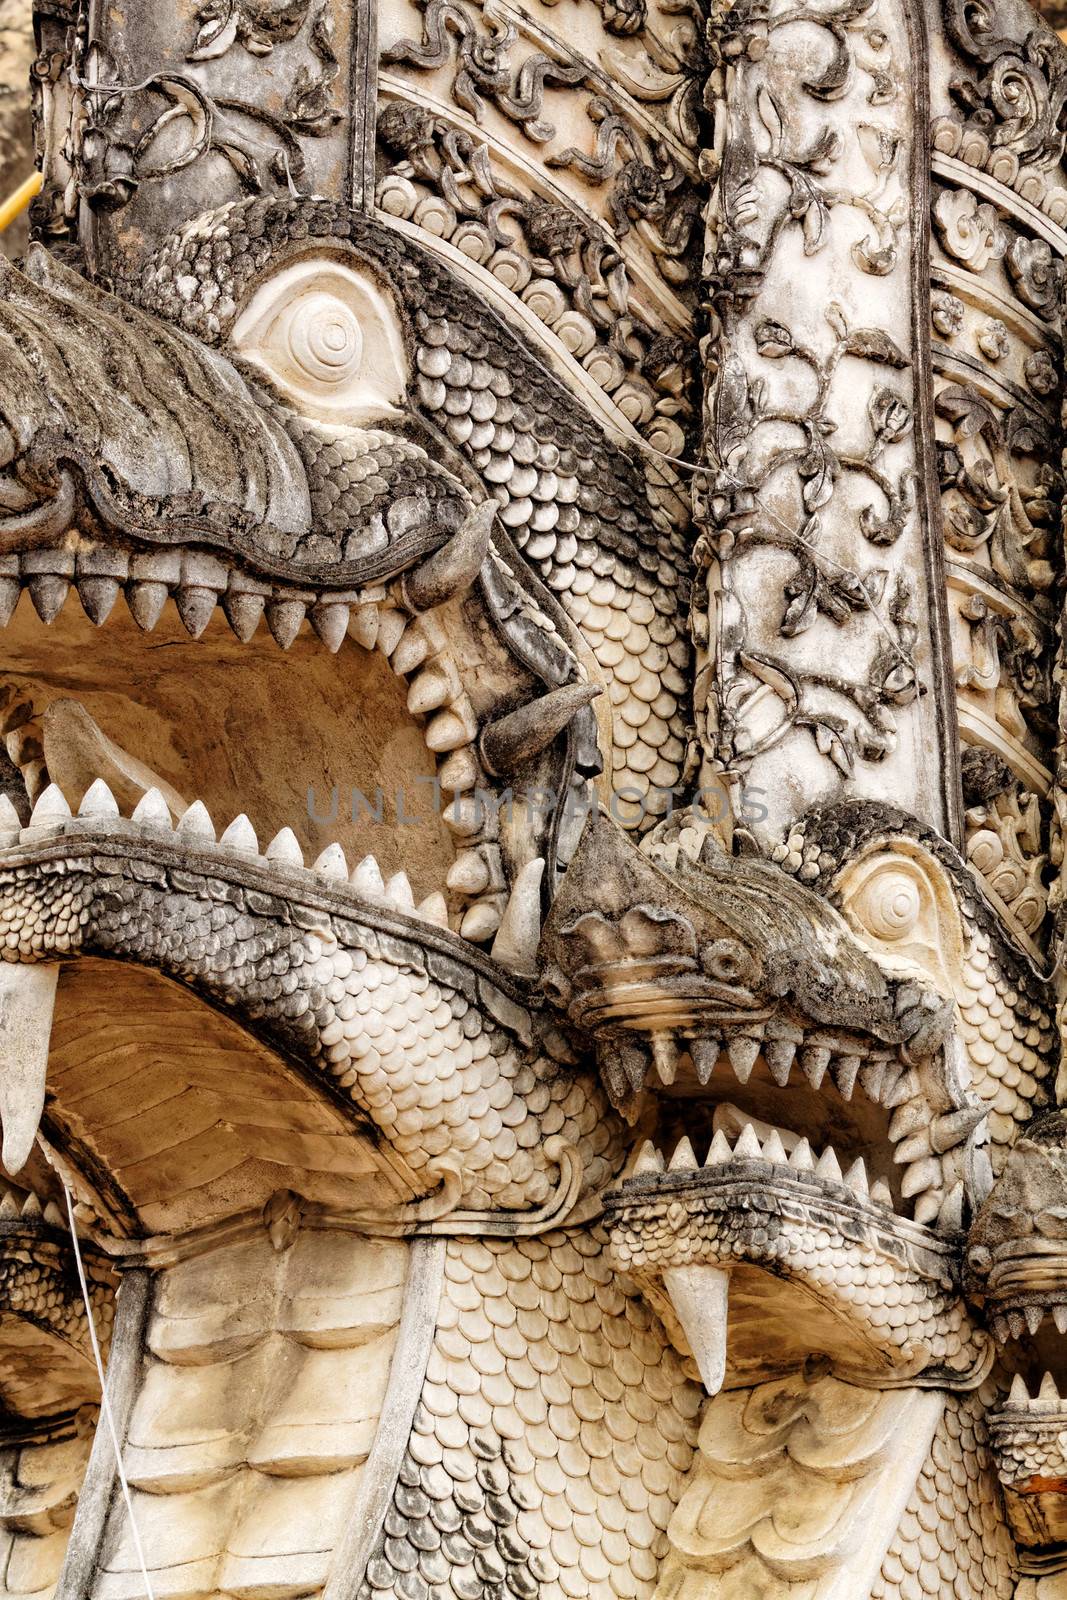 dragon sculpture in Thailand temple